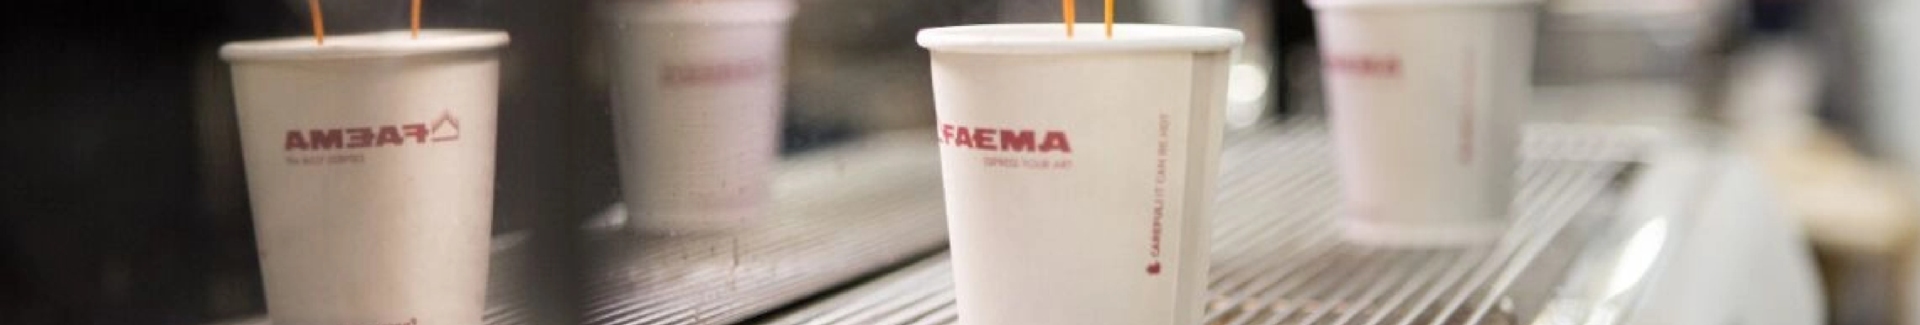 Faema Coffee Cups